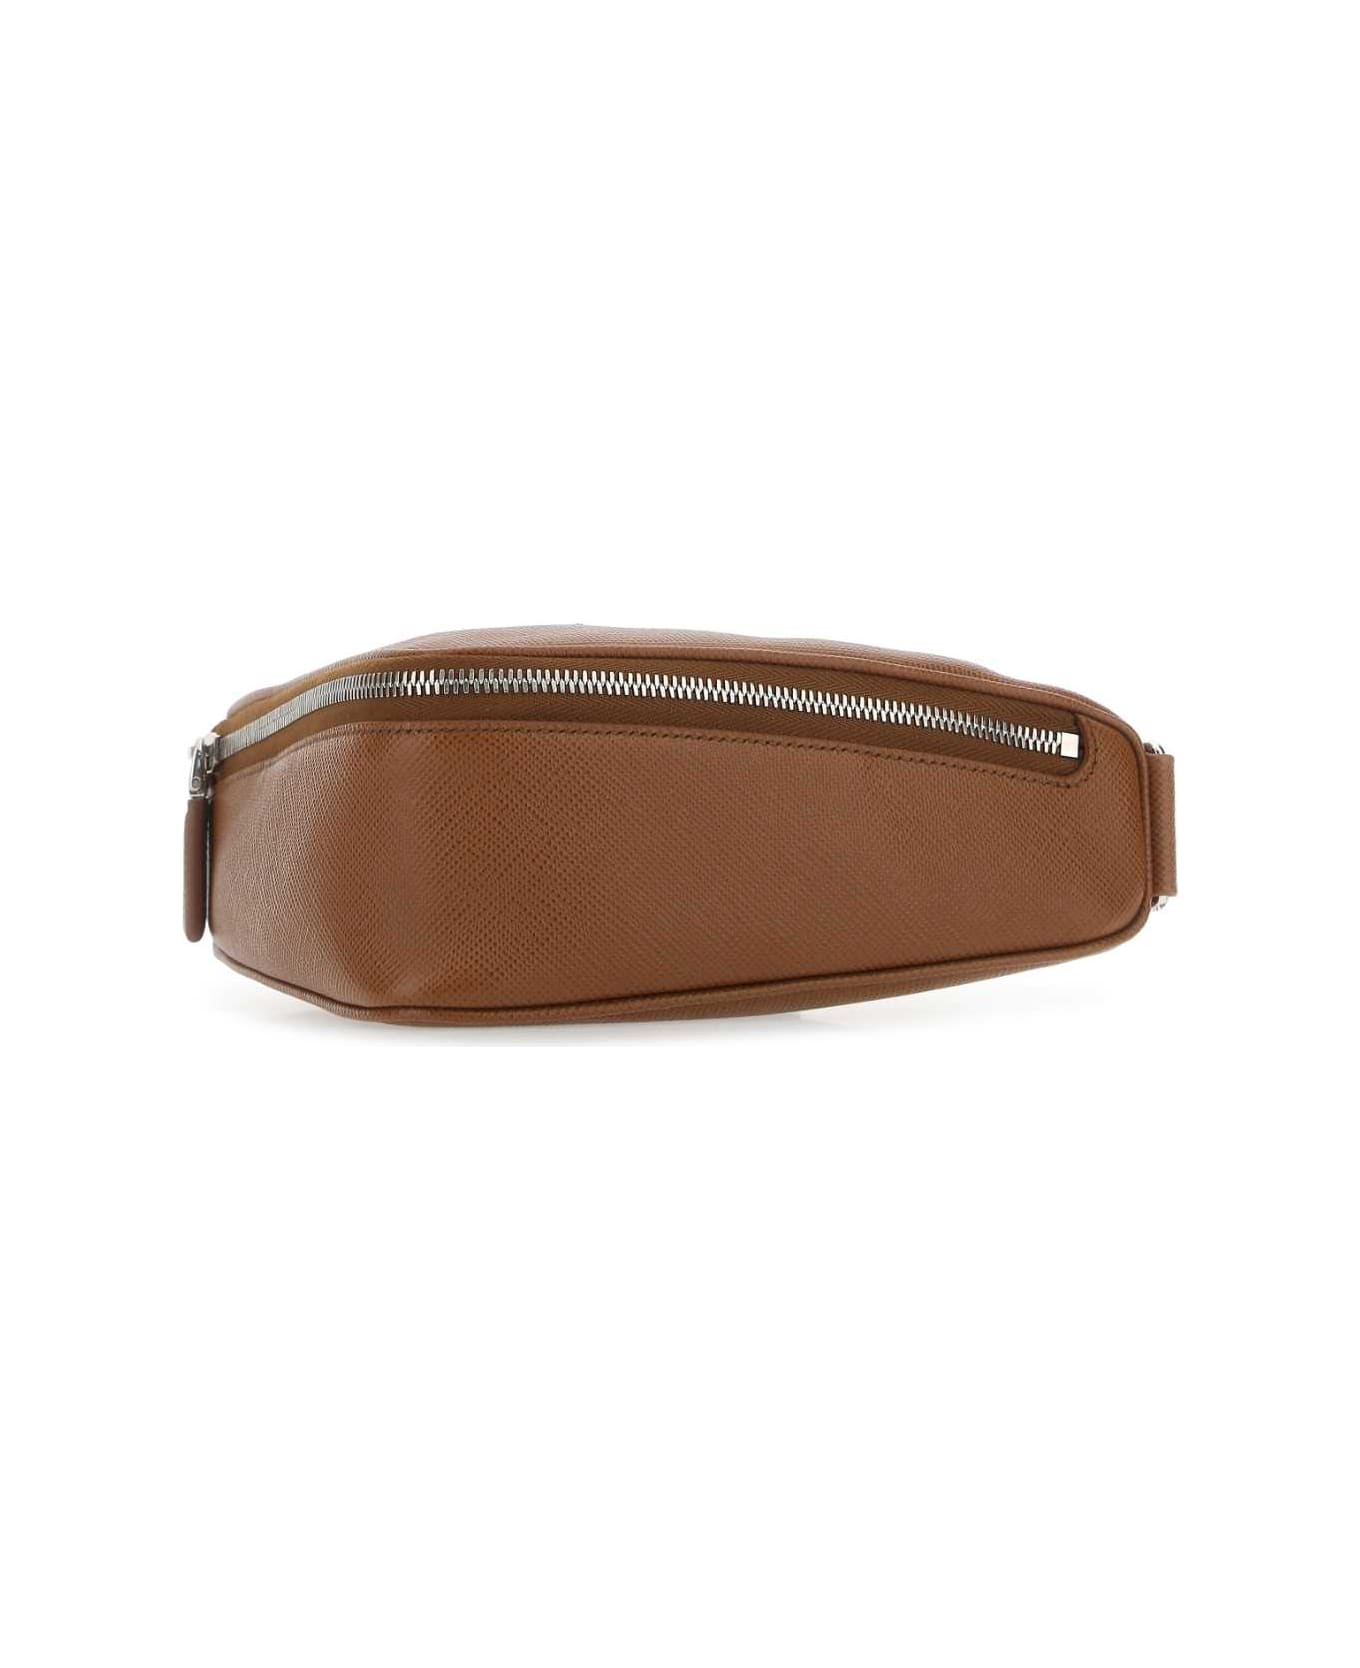 Prada Brown Leather Belt Bag - F0046